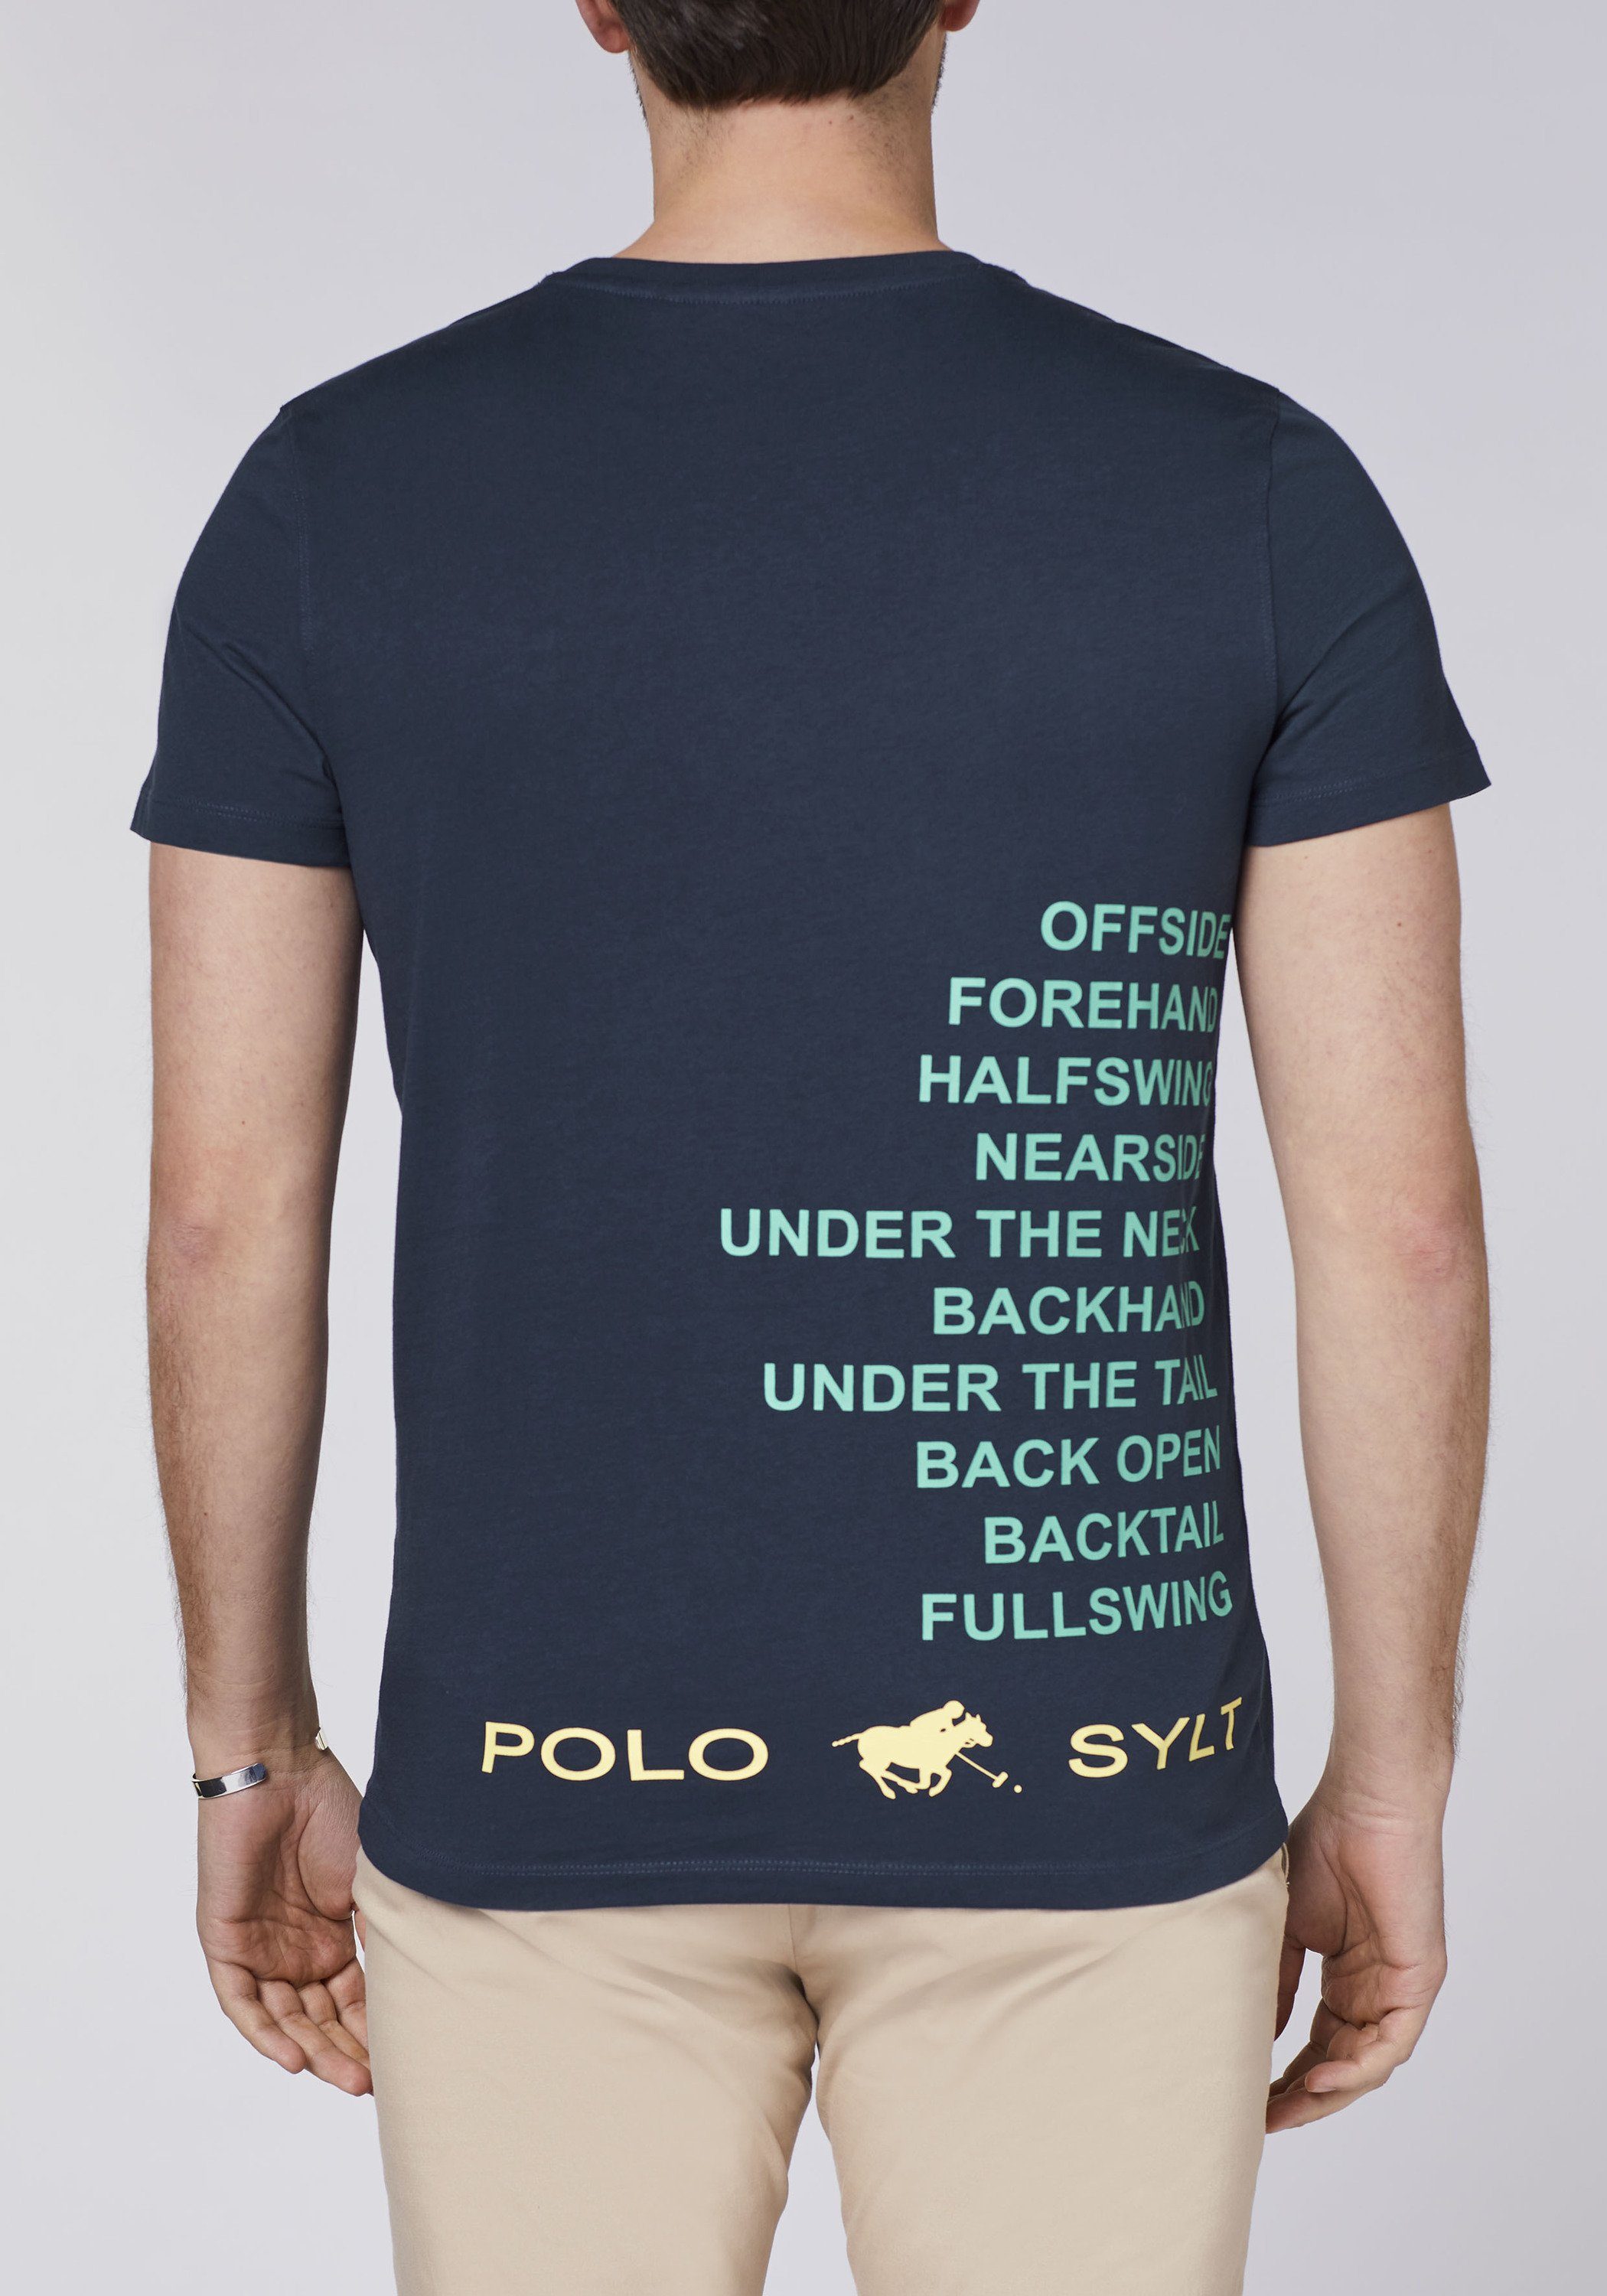 Polo Print-Botschaft 19-4010 Sylt Eclipse Print-Shirt mit Total